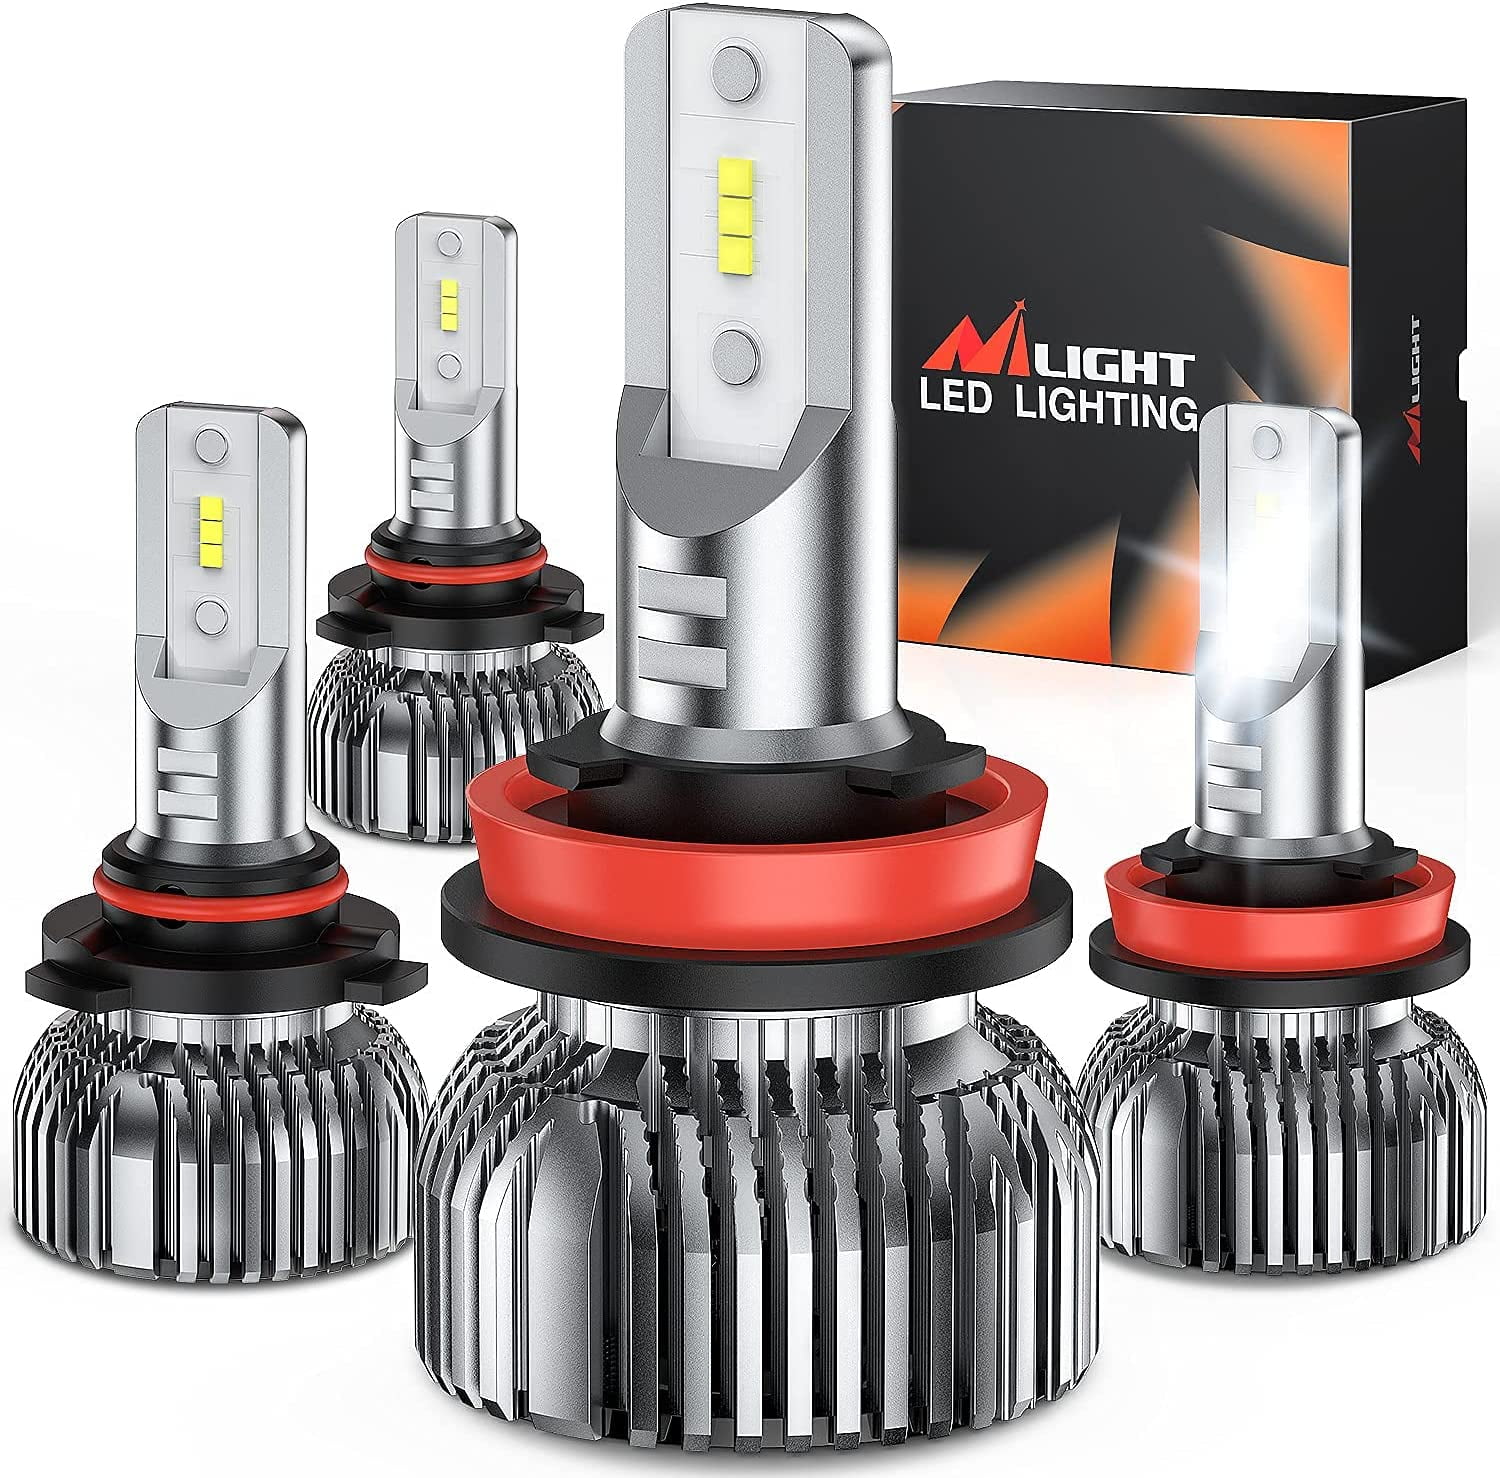 H8 H11 H16 Fog Light Nilight E1 H11 LED Headlight Bulbs Mini Size H9 High Beam 350% Brighter H11 Low Beam 6000K Cool White 50W 10000lm Headlamp Bulbs Pack of 2 